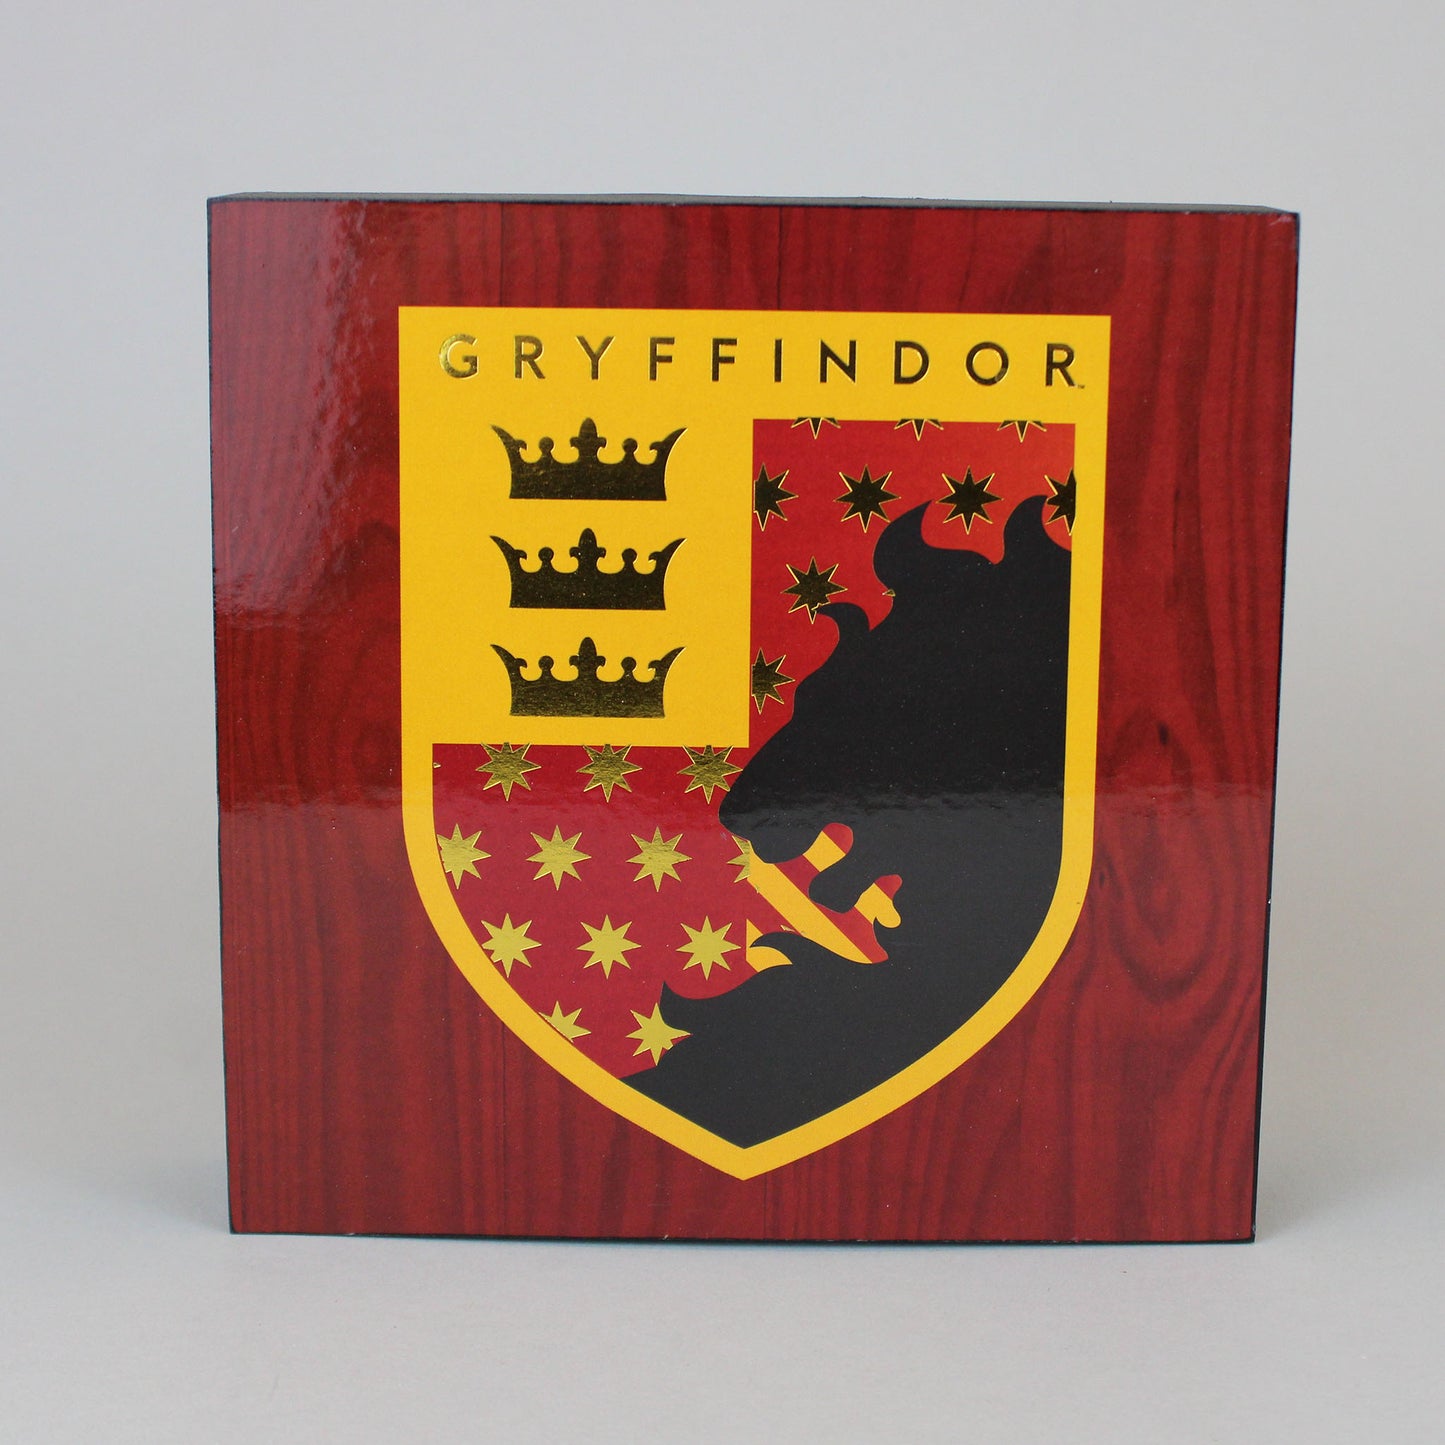 Gryffindor House (Harry Potter) Shield Block Sign